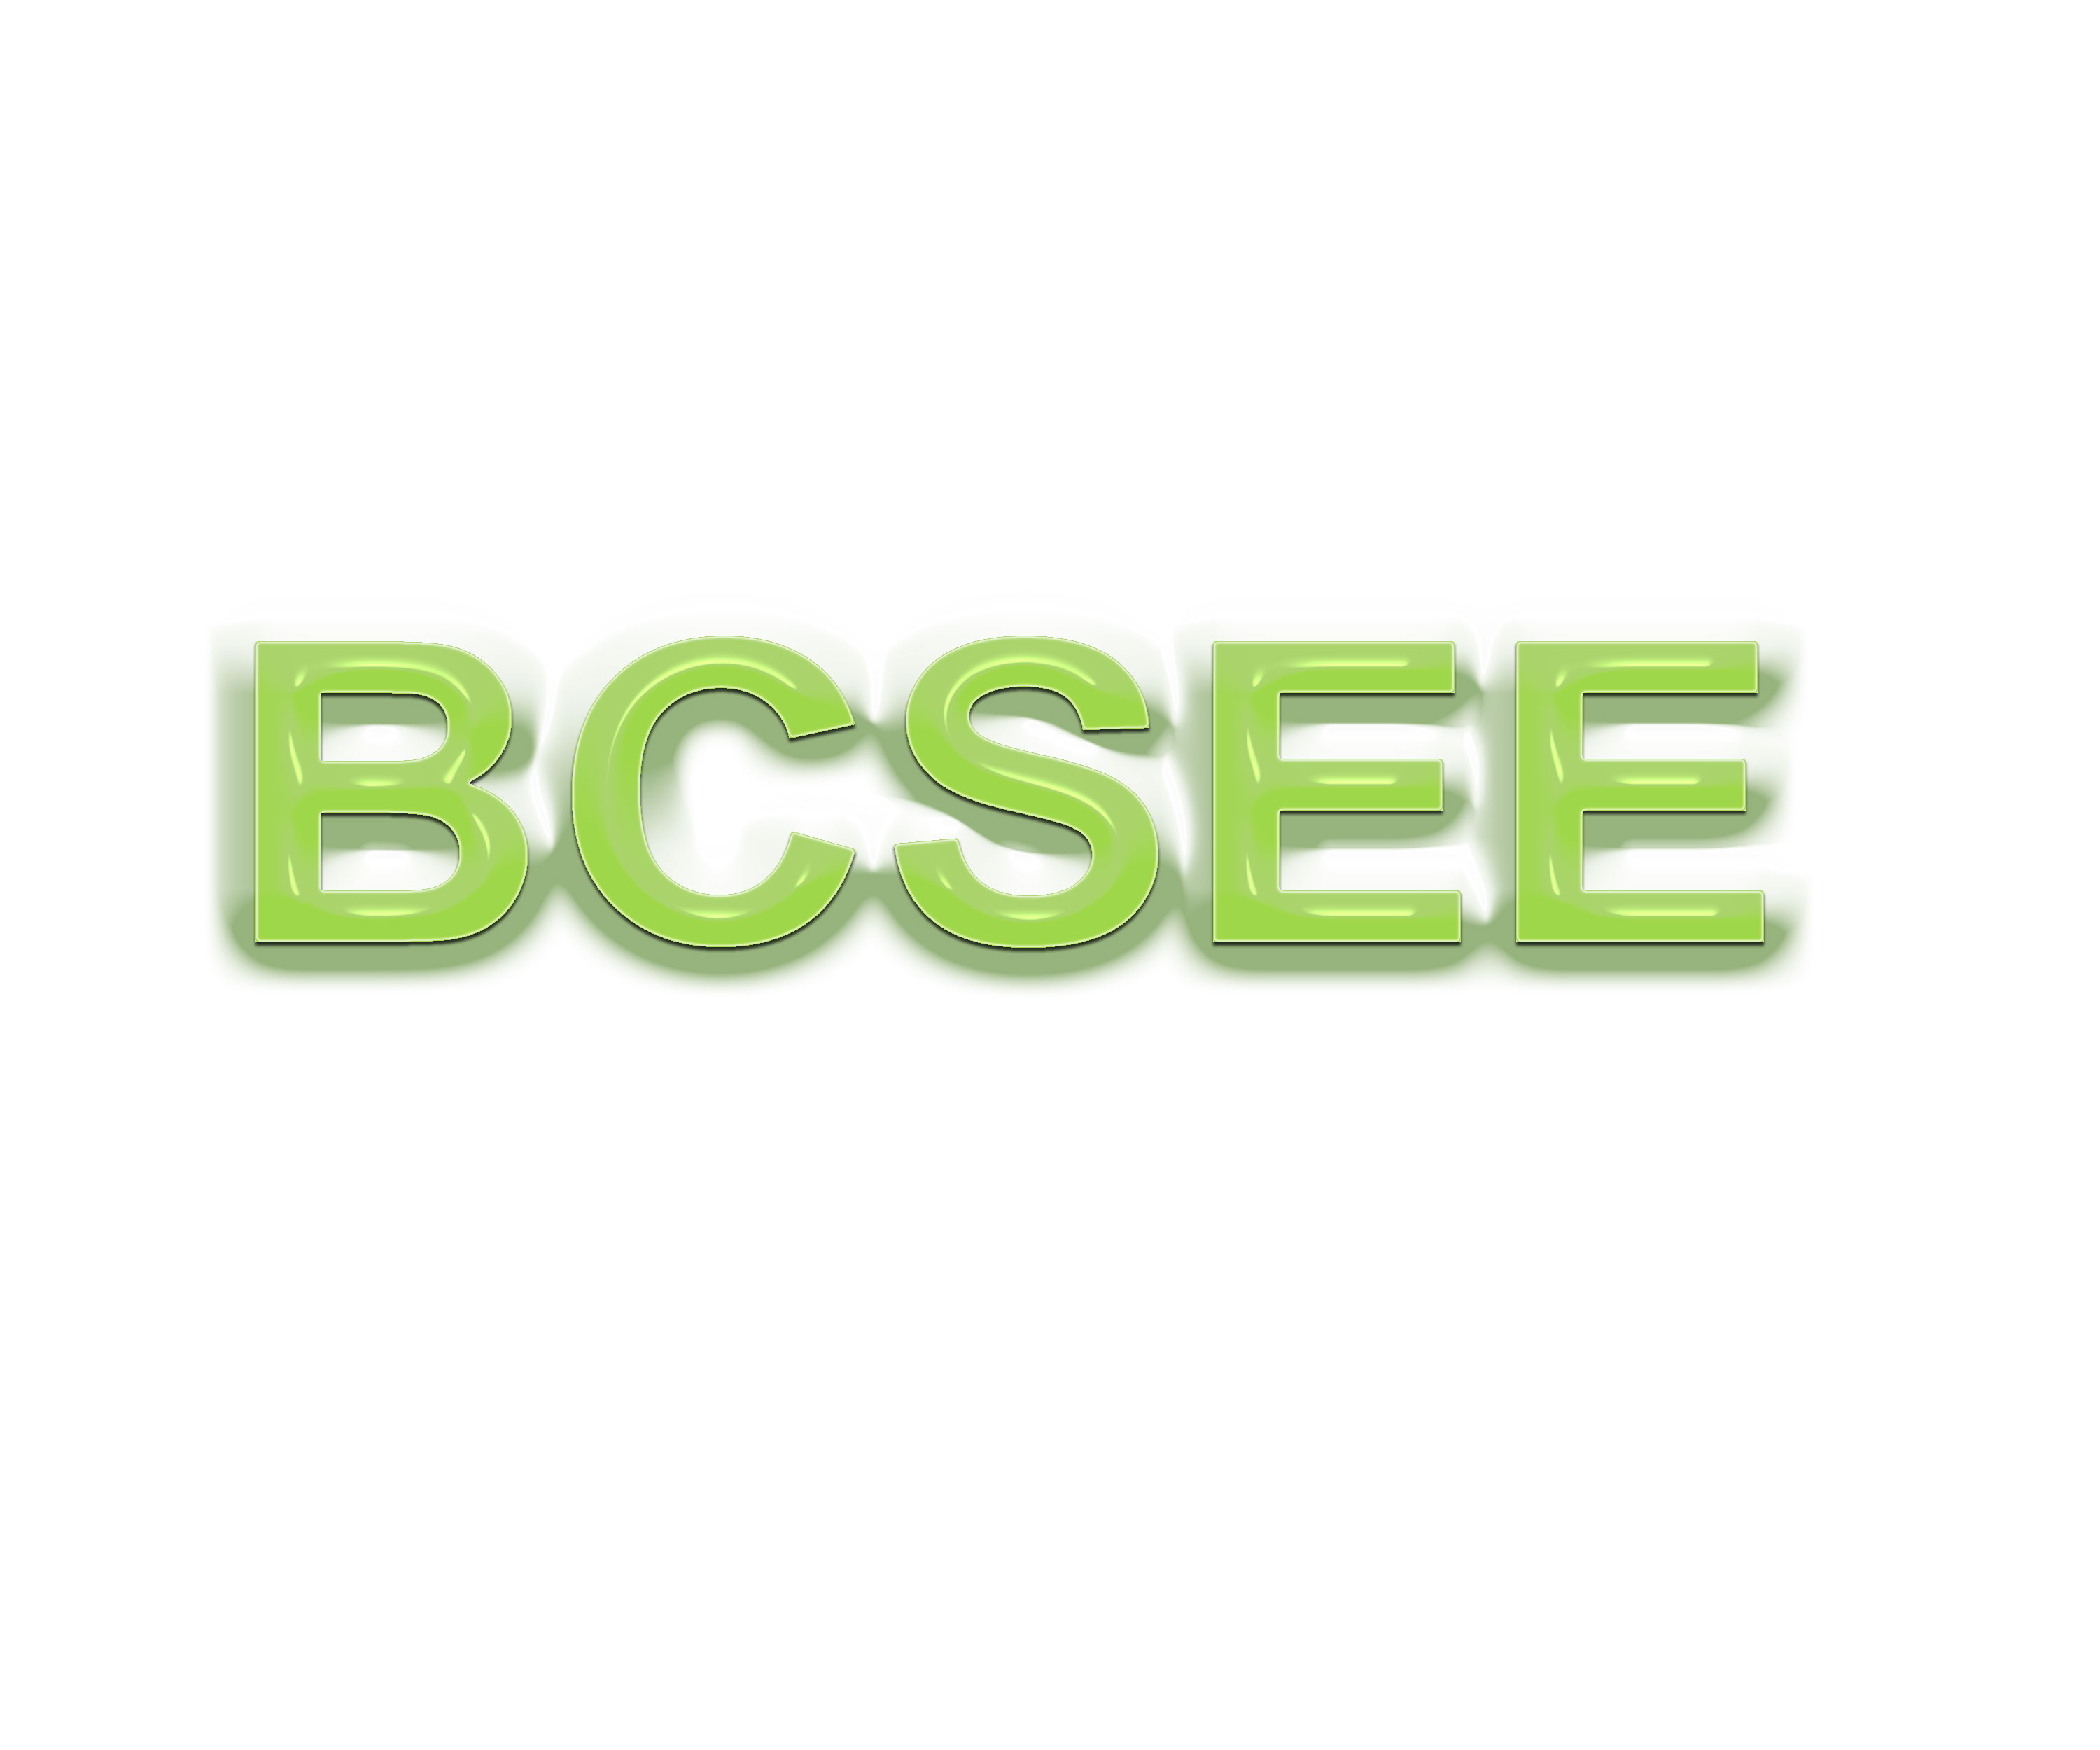 BCSEE CCTV